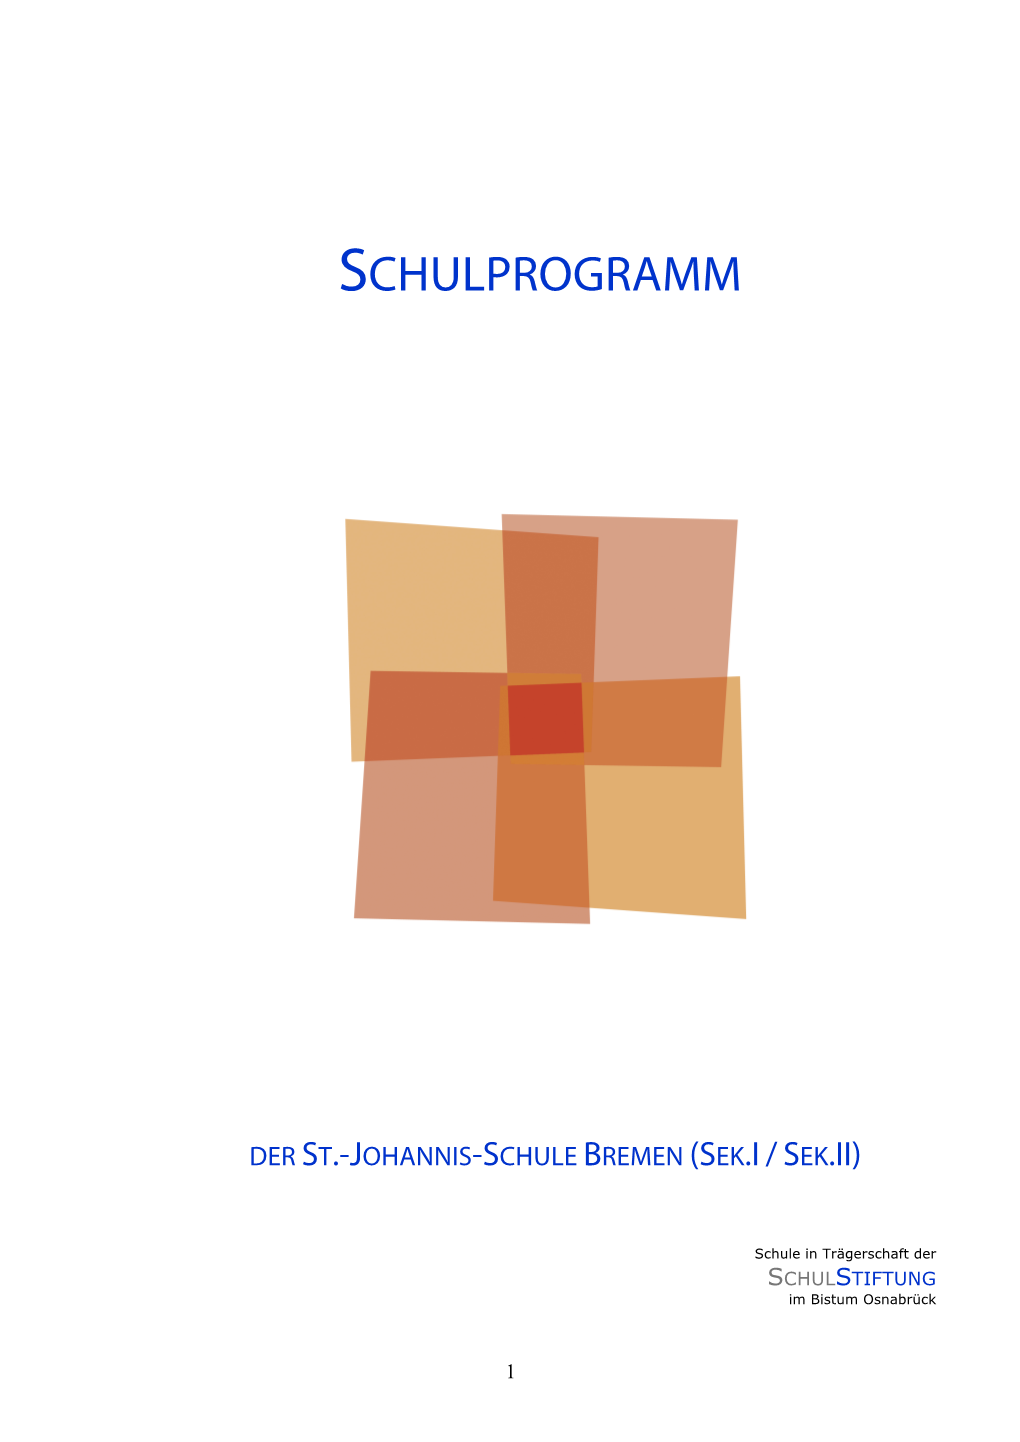 Schulprogramm SJS Bremen